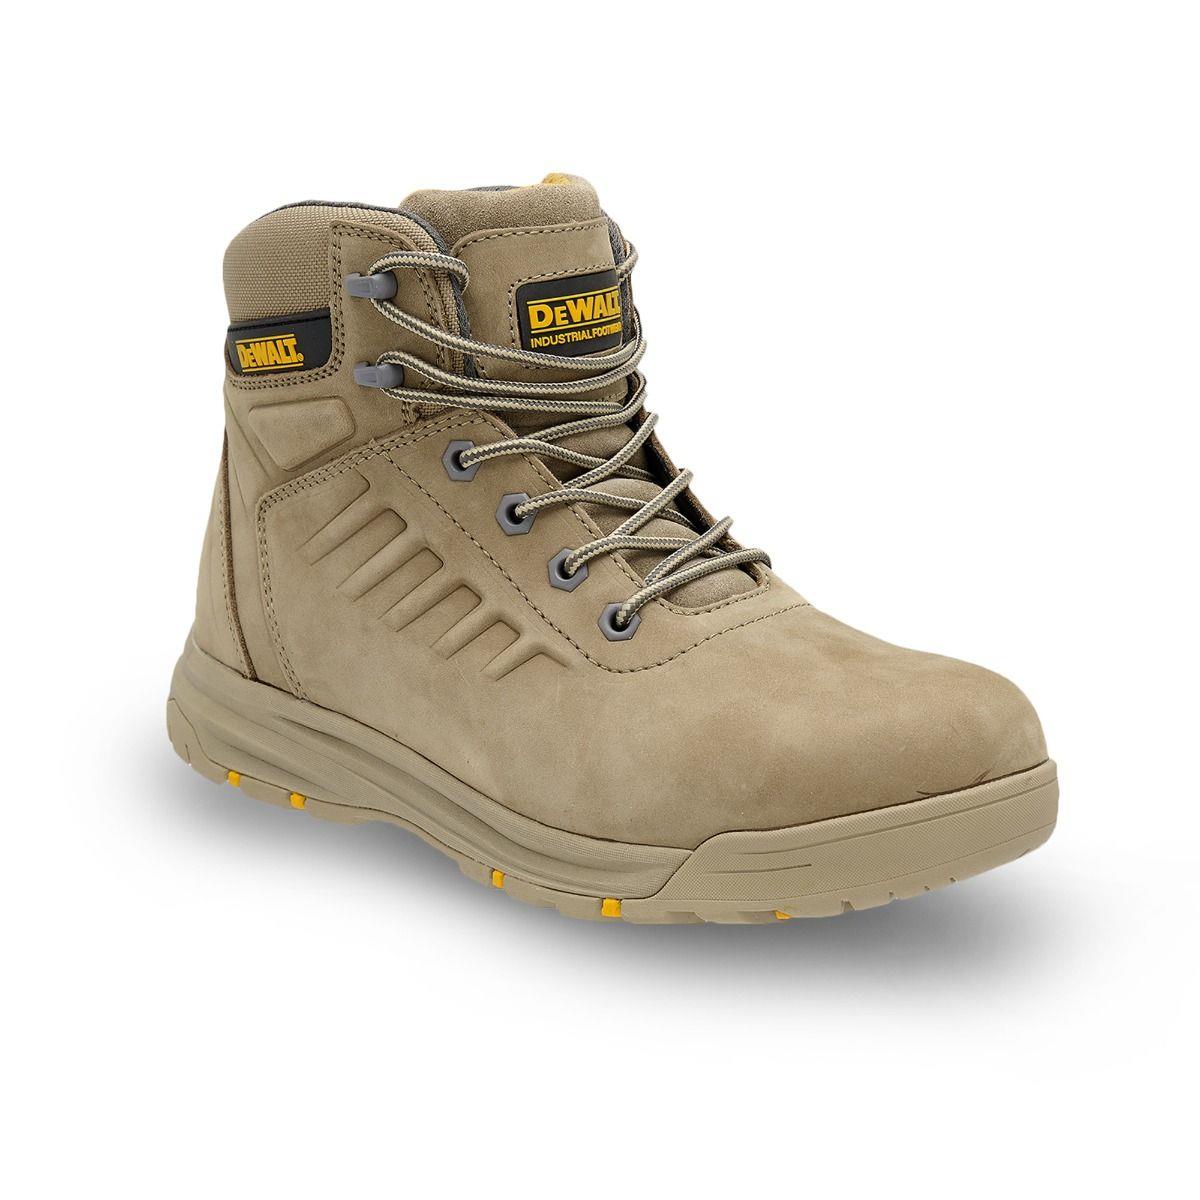 DeWalt Lima SB stone nubuck steel toe composite midsole work safety boots